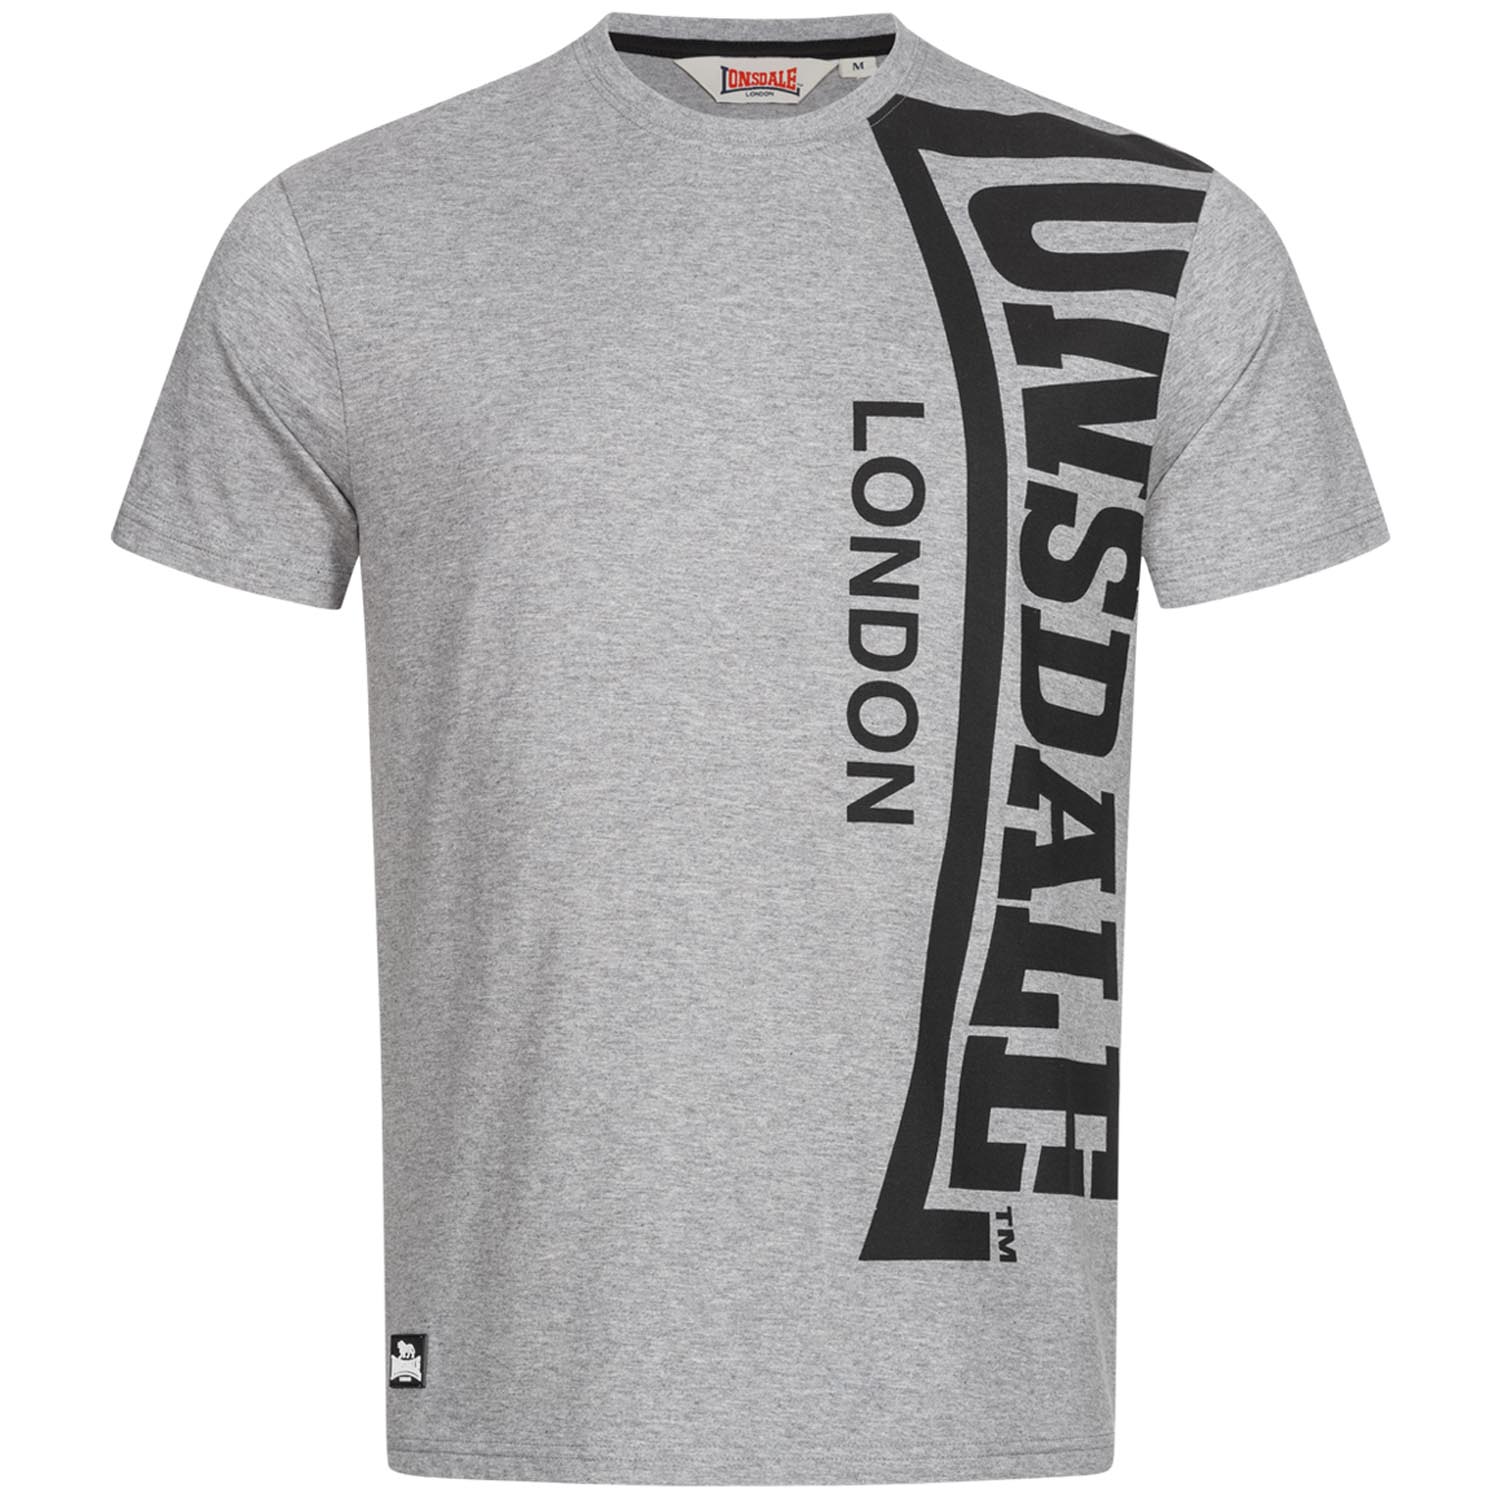 Lonsdale T-Shirt, Holyrood, grau